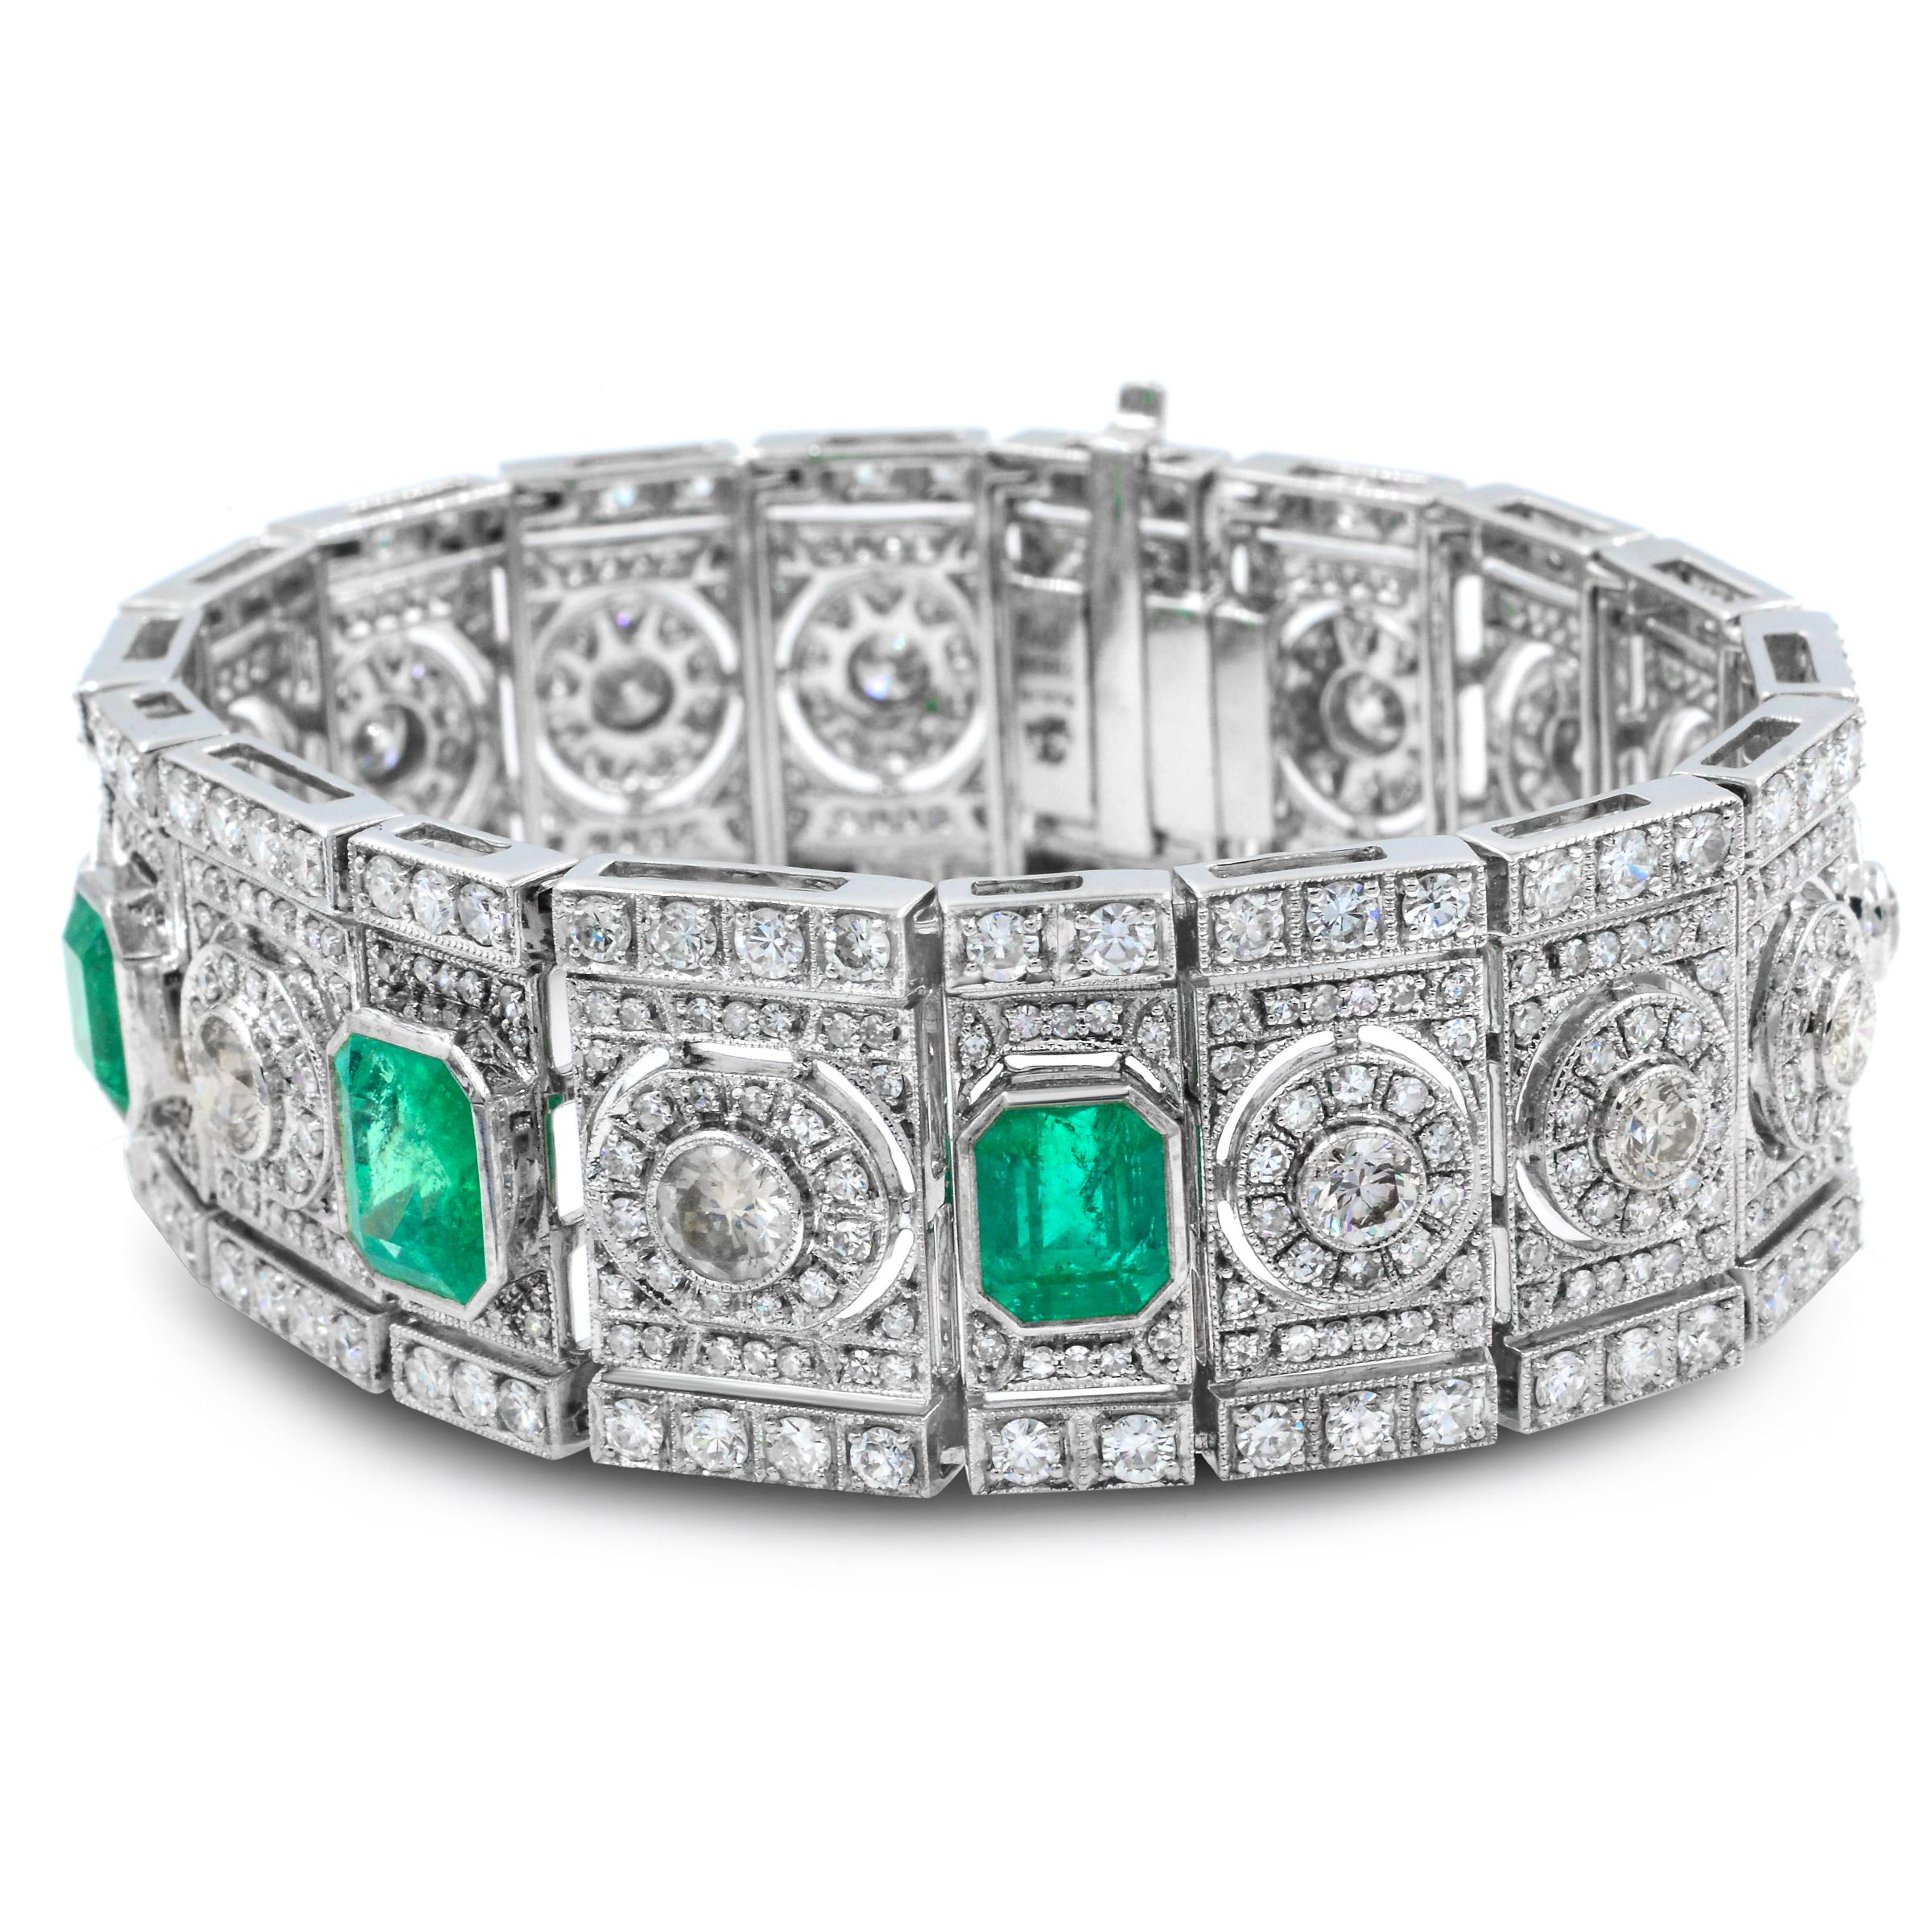 Retro Art Deco Emerald and Diamond Wide Bracelet in 18 Karat White Gold